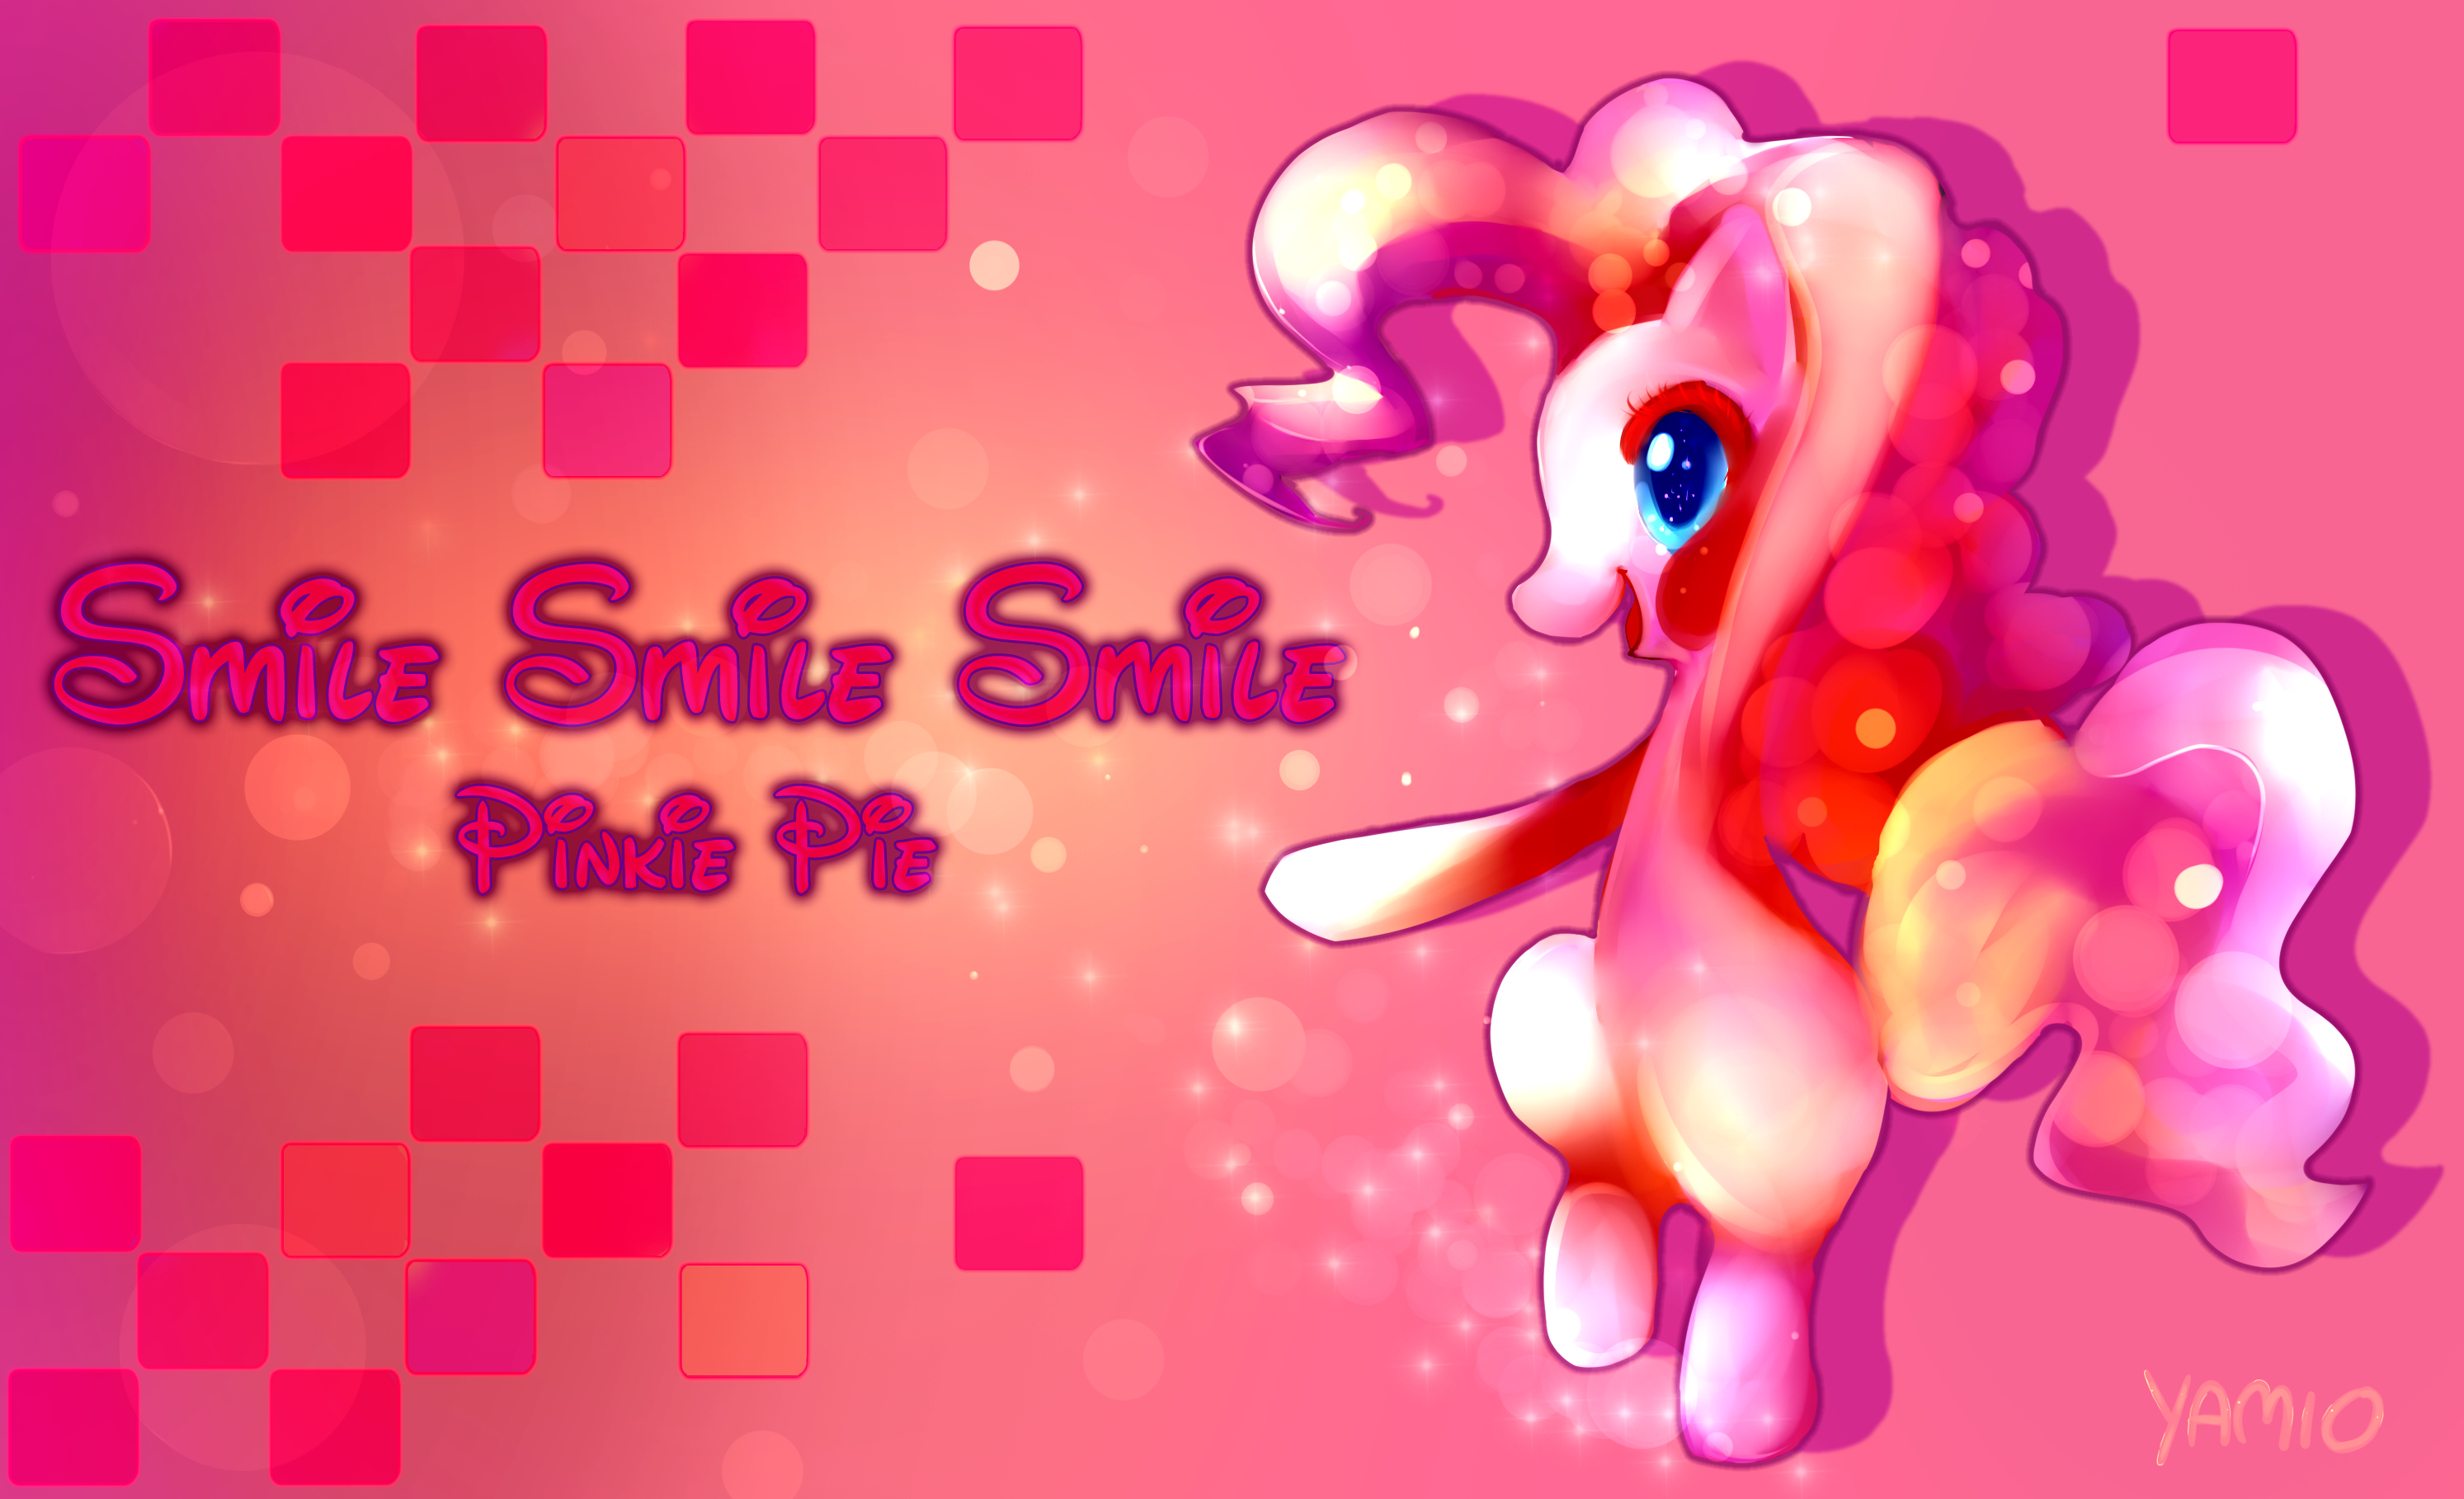 Pinkie Pie - Smile Smile Smile by Yamio